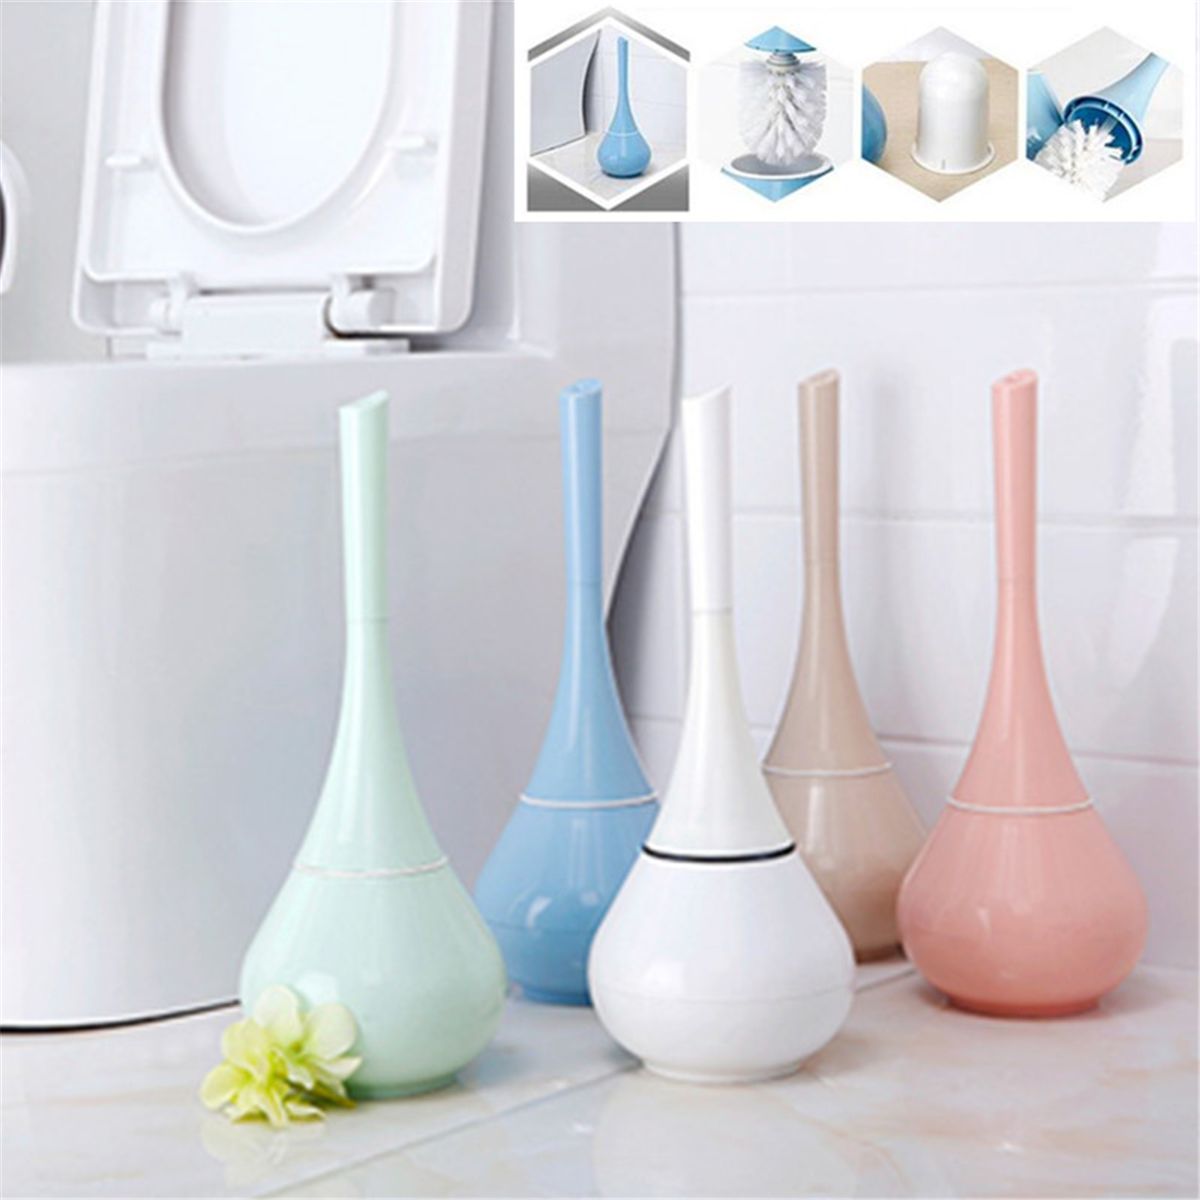 Removable-Toilet-Brush-Set-Bathroom-Plastic-Handle-Vase-Shape-Holder-Cleaning-Brushes-1458512